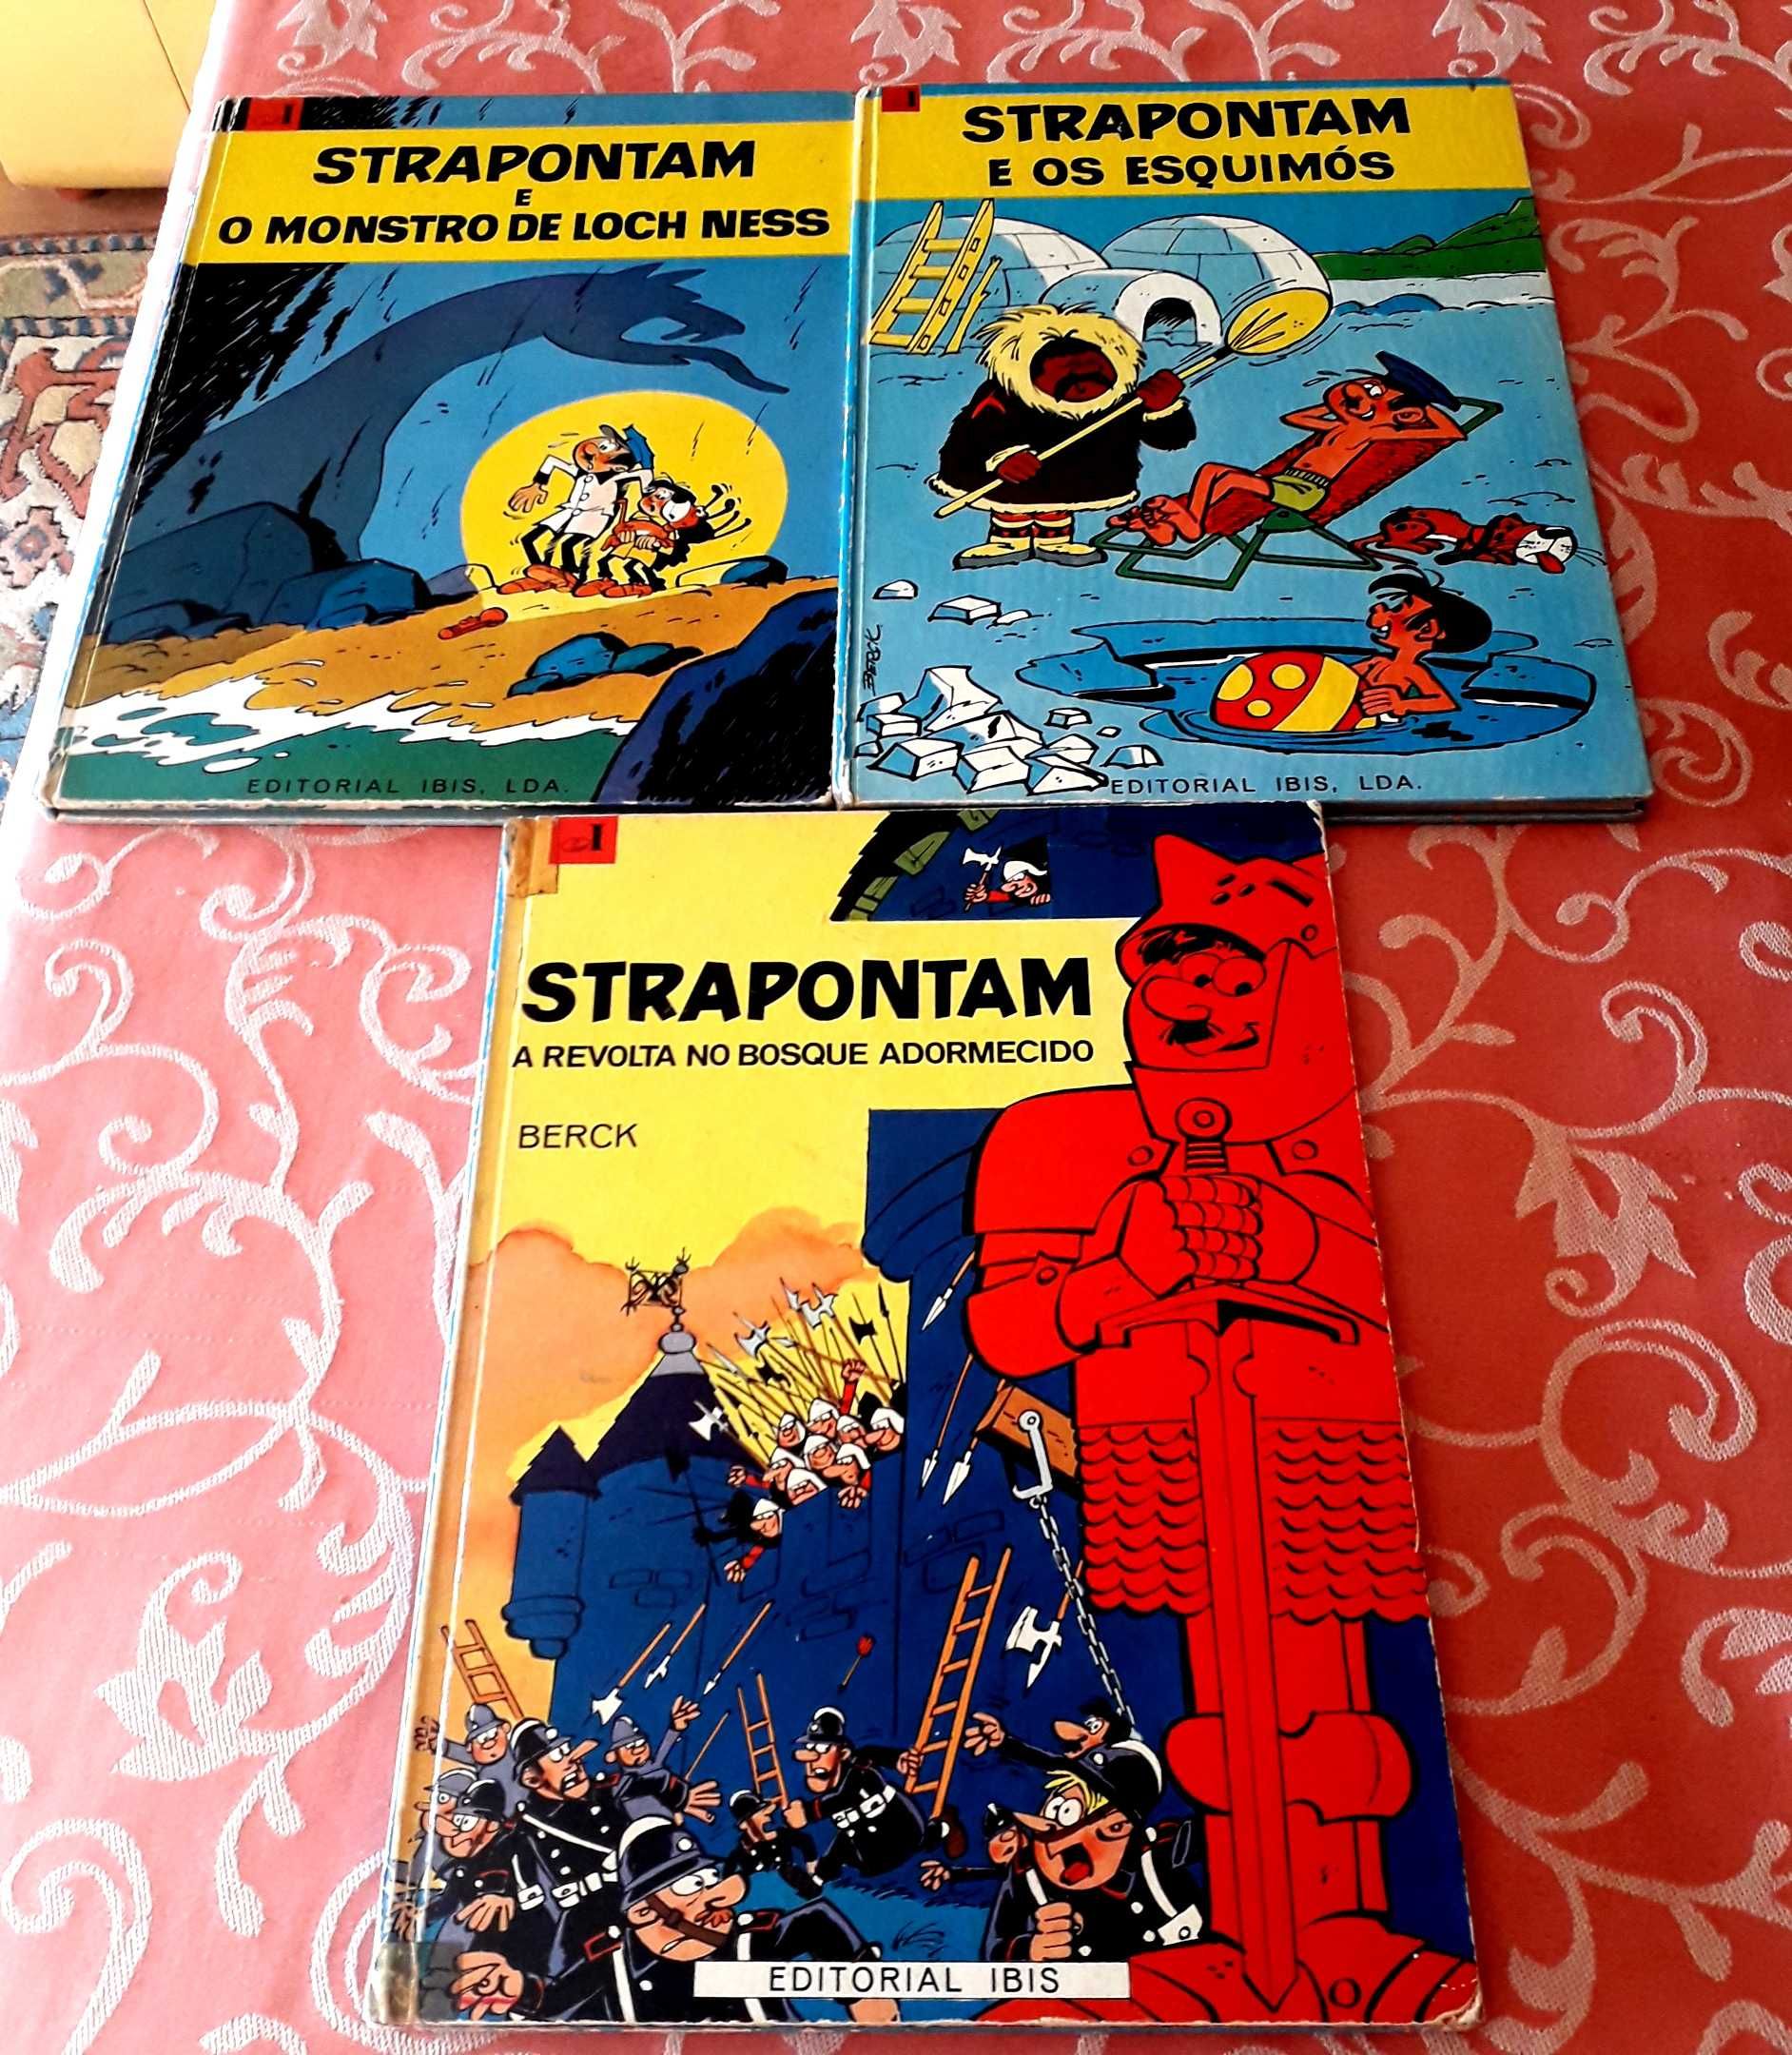 Livros BD - Berck - Strapontam - Editorial Ibis Lda. 1965/68